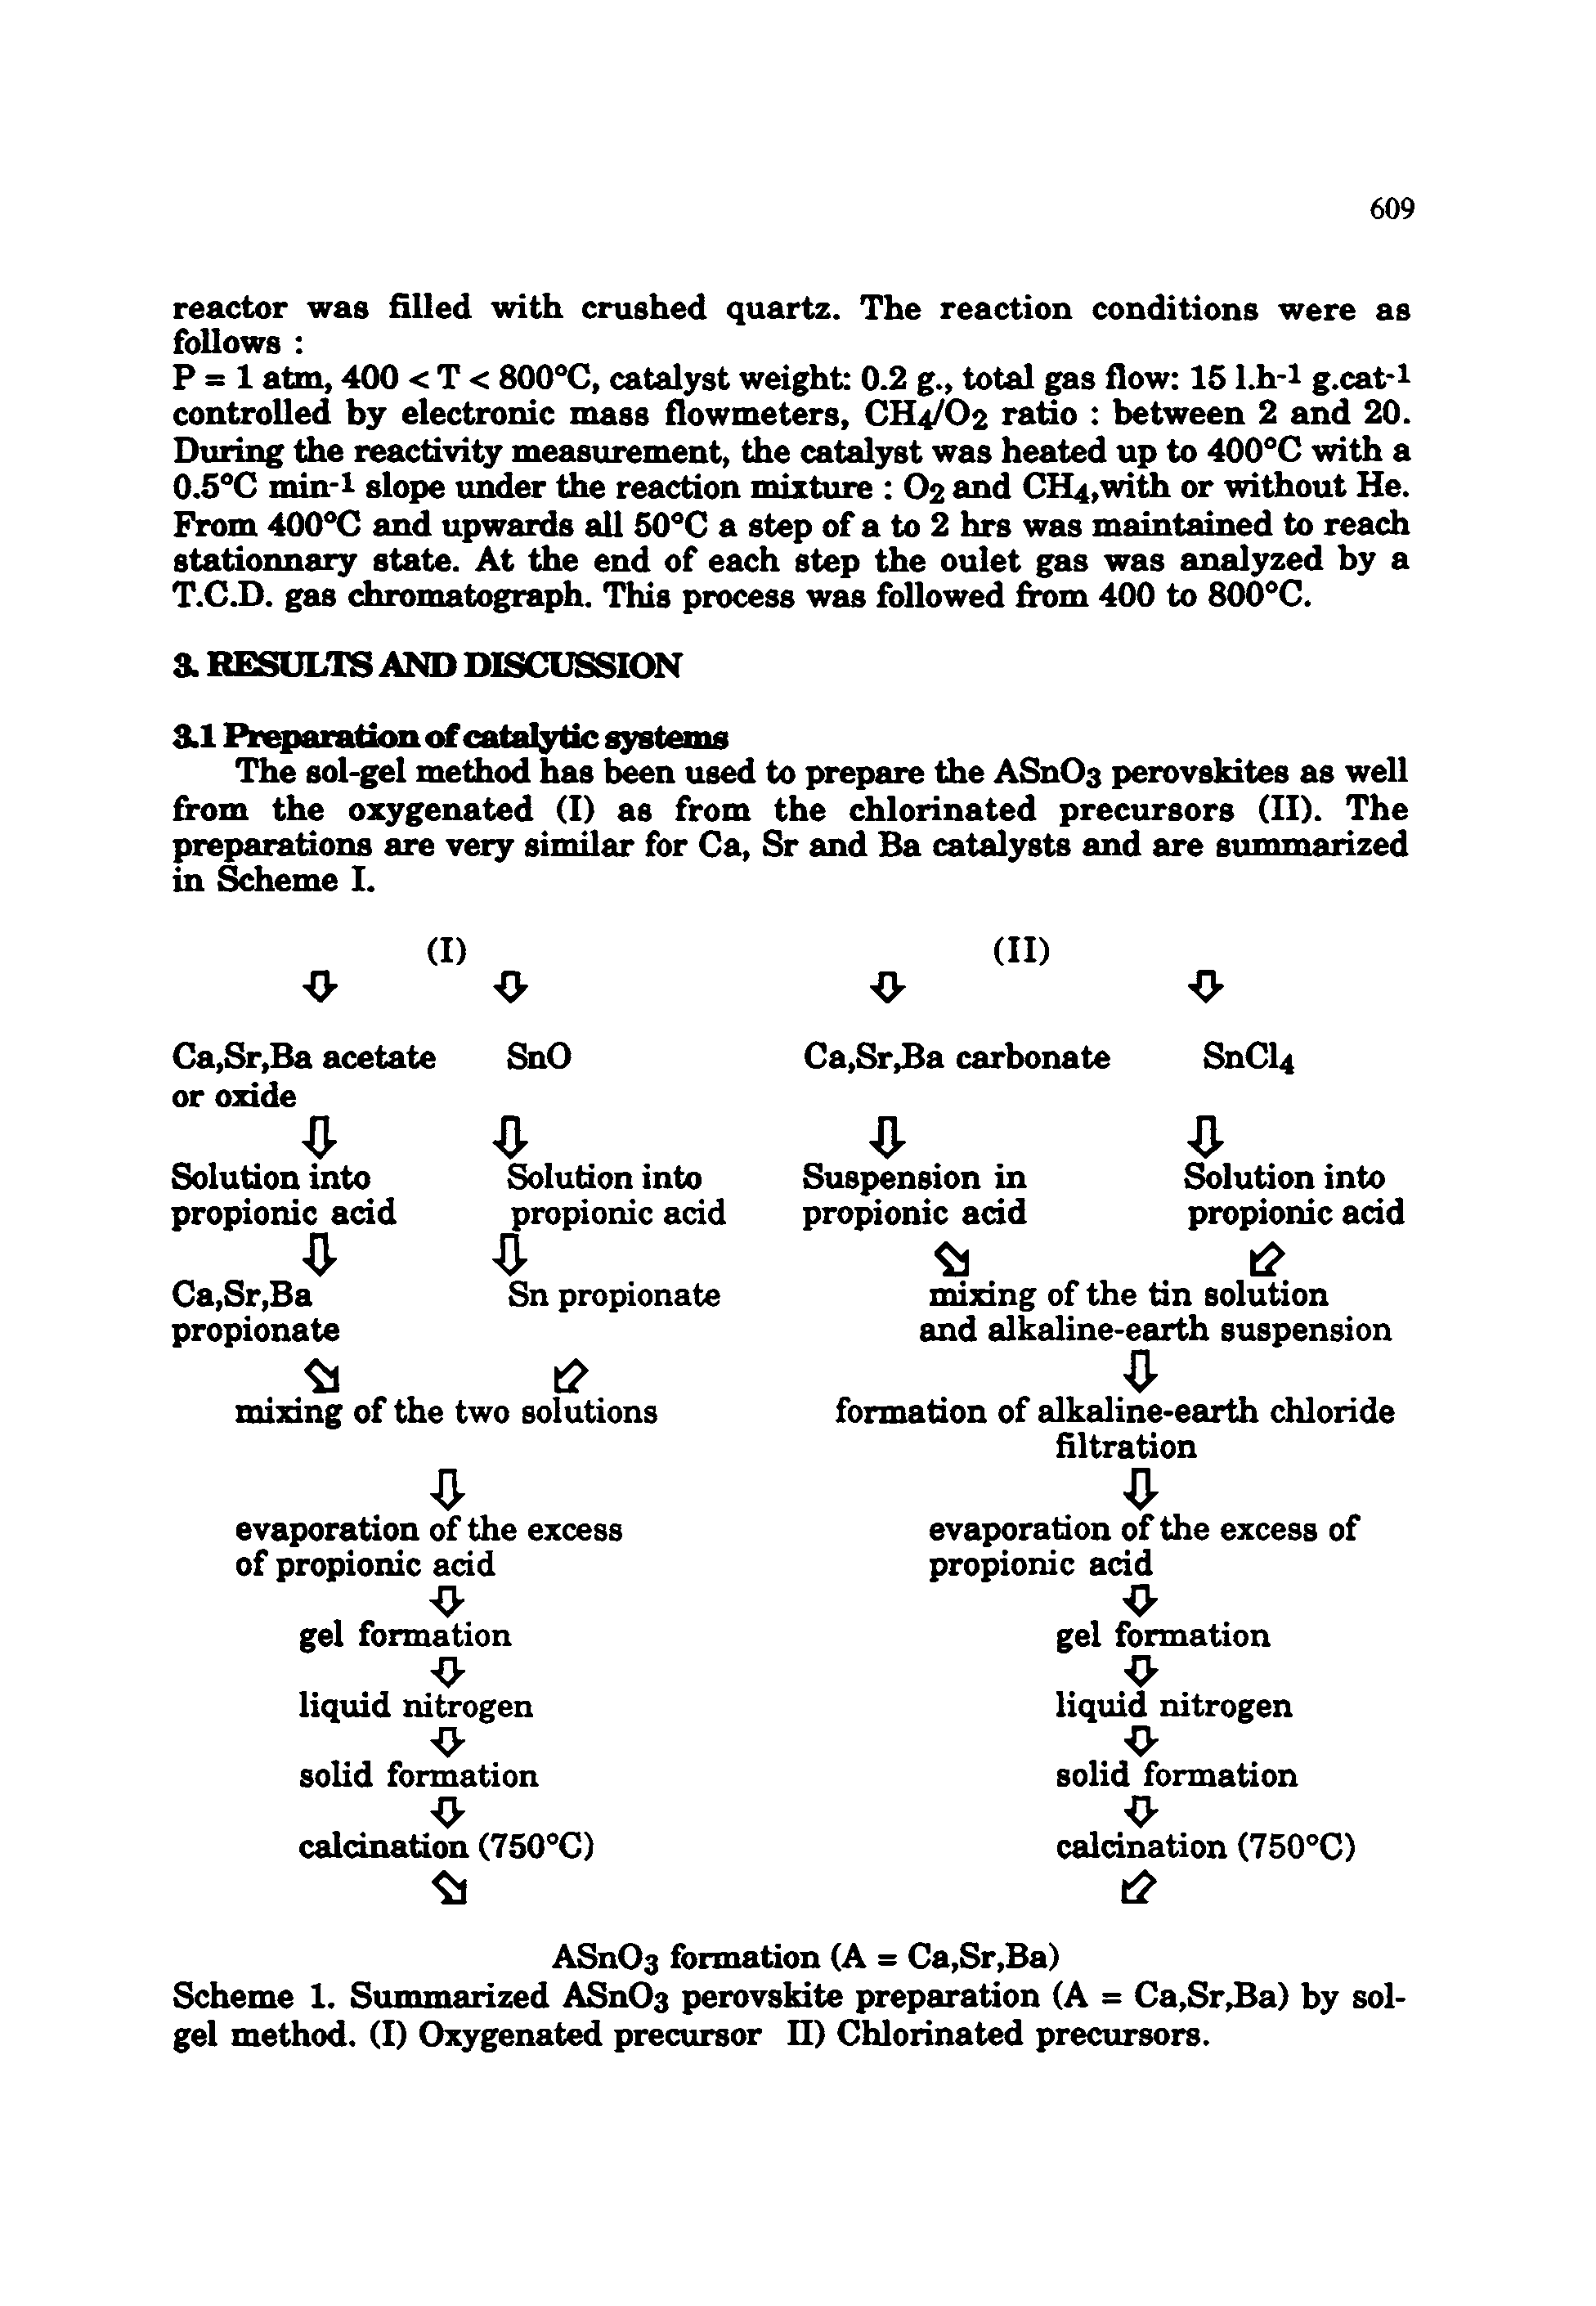 Scheme 1. Summarized ASnOs perovskite preparation (A Ca,Sr3a) by sol-gel method. (I) Oxygenated precursor H) Chlorinated precursors.